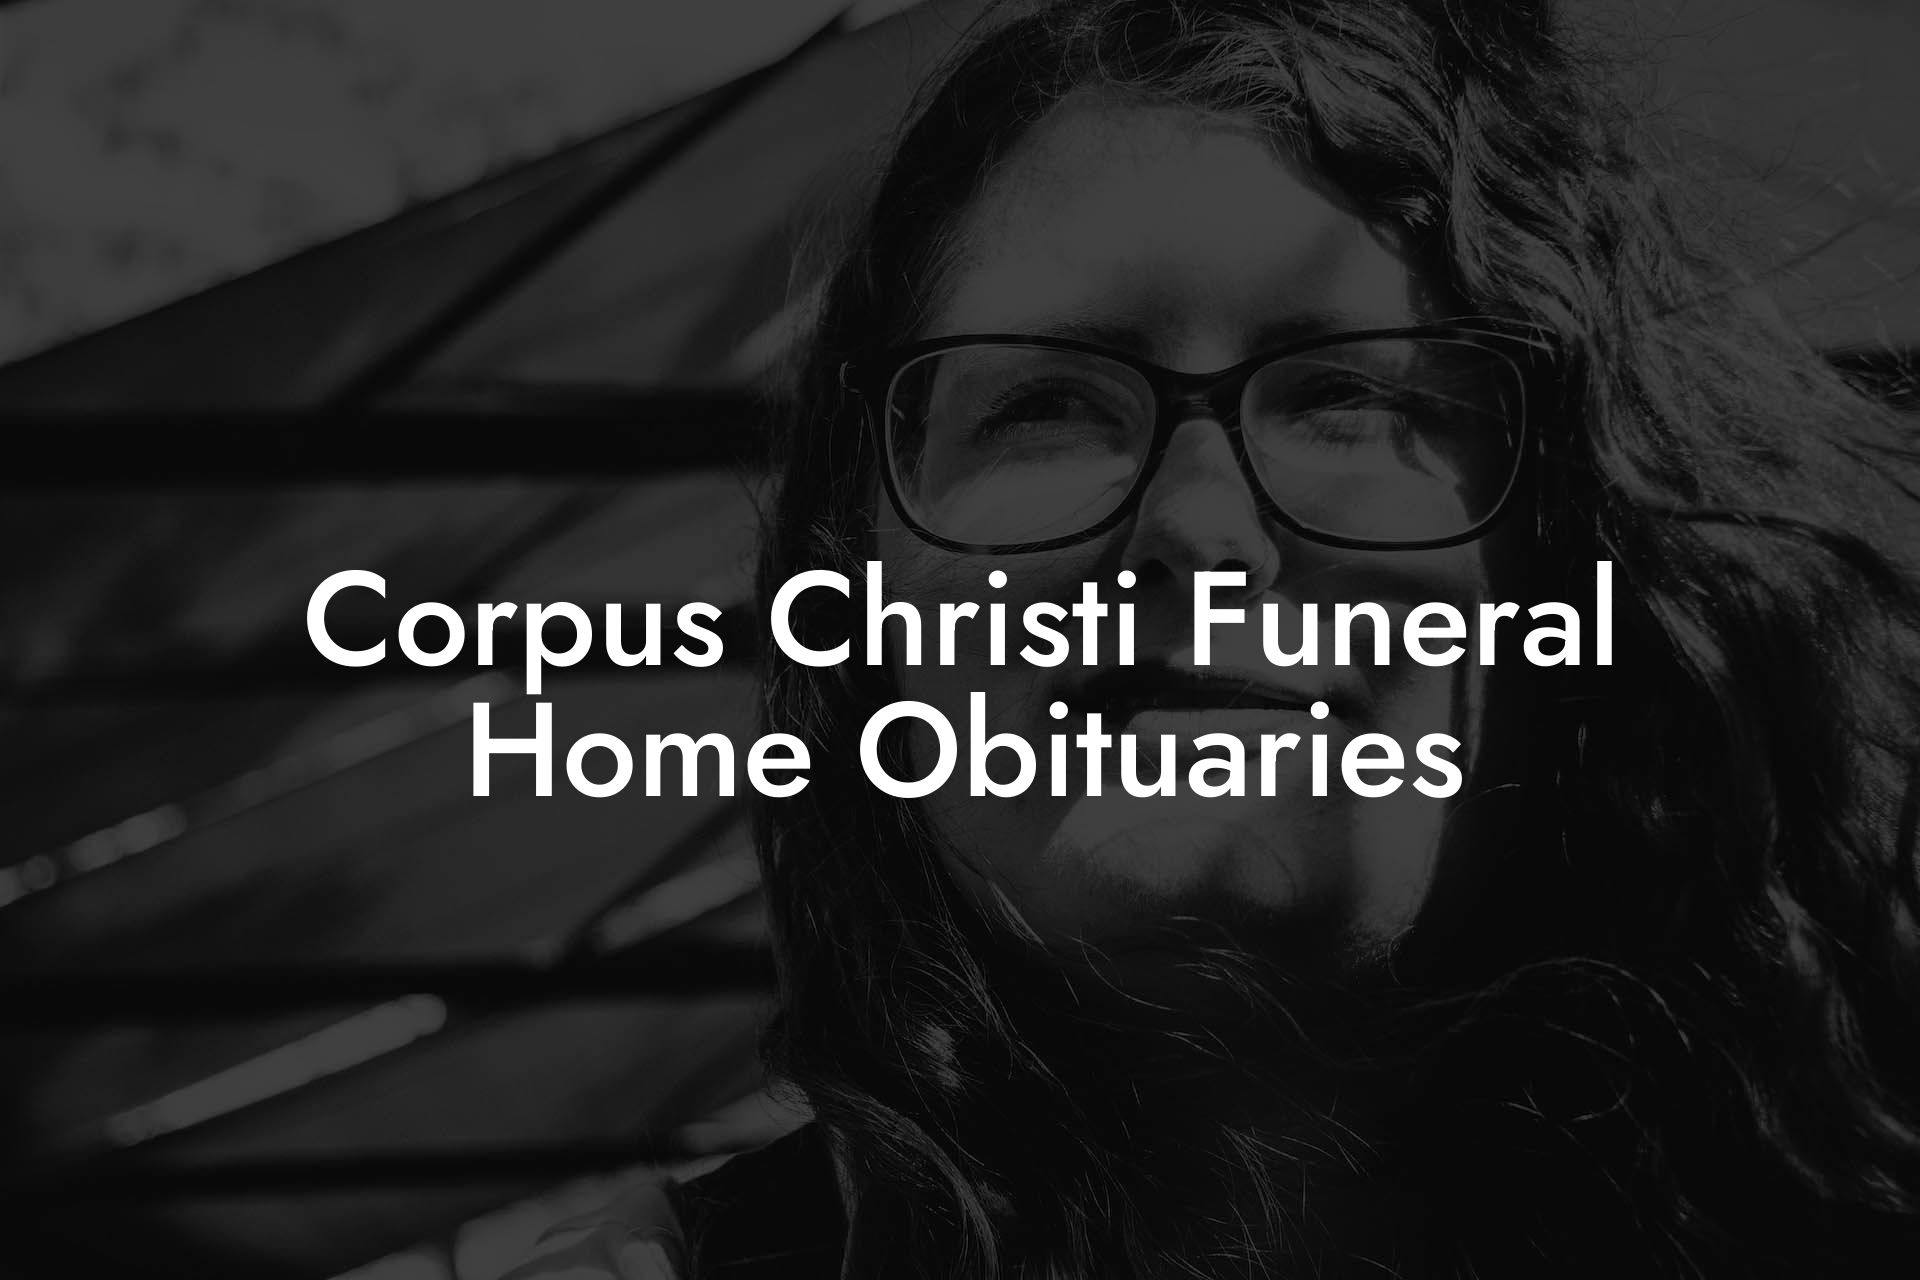 Corpus Christi Funeral Home Obituaries